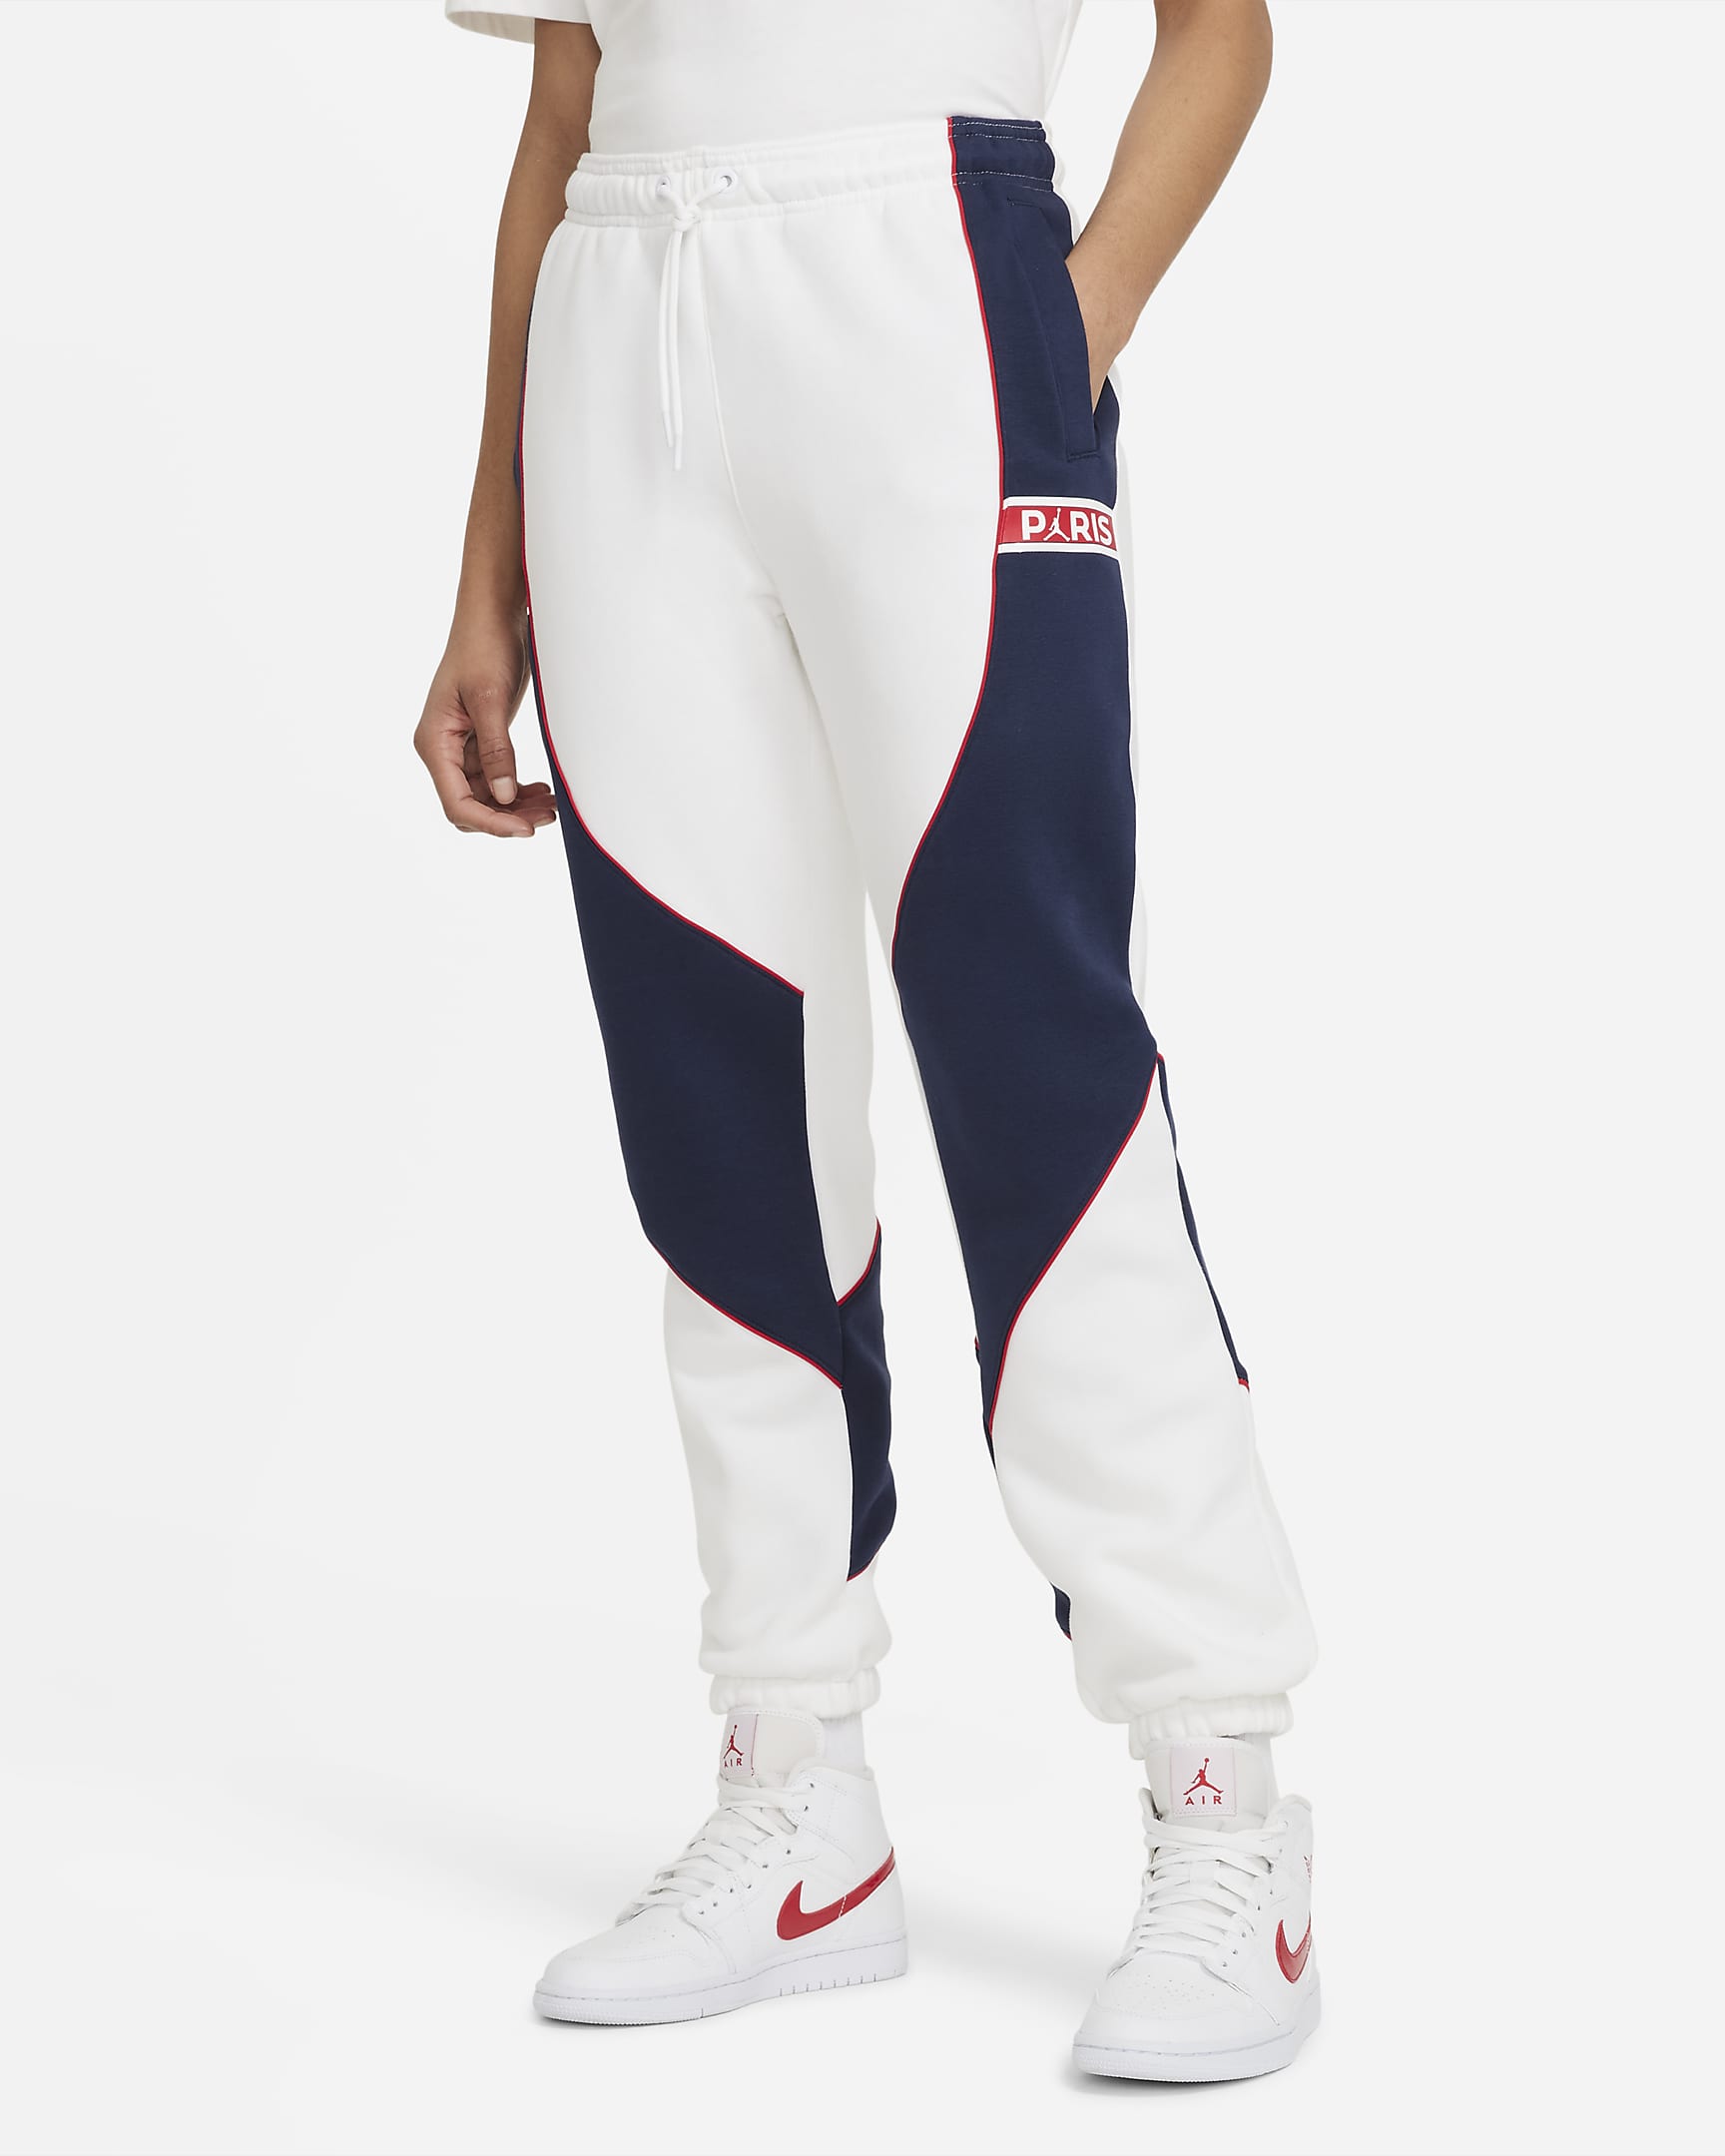 Paris Saint-Germain Women's Fleece Pants. Nike.com